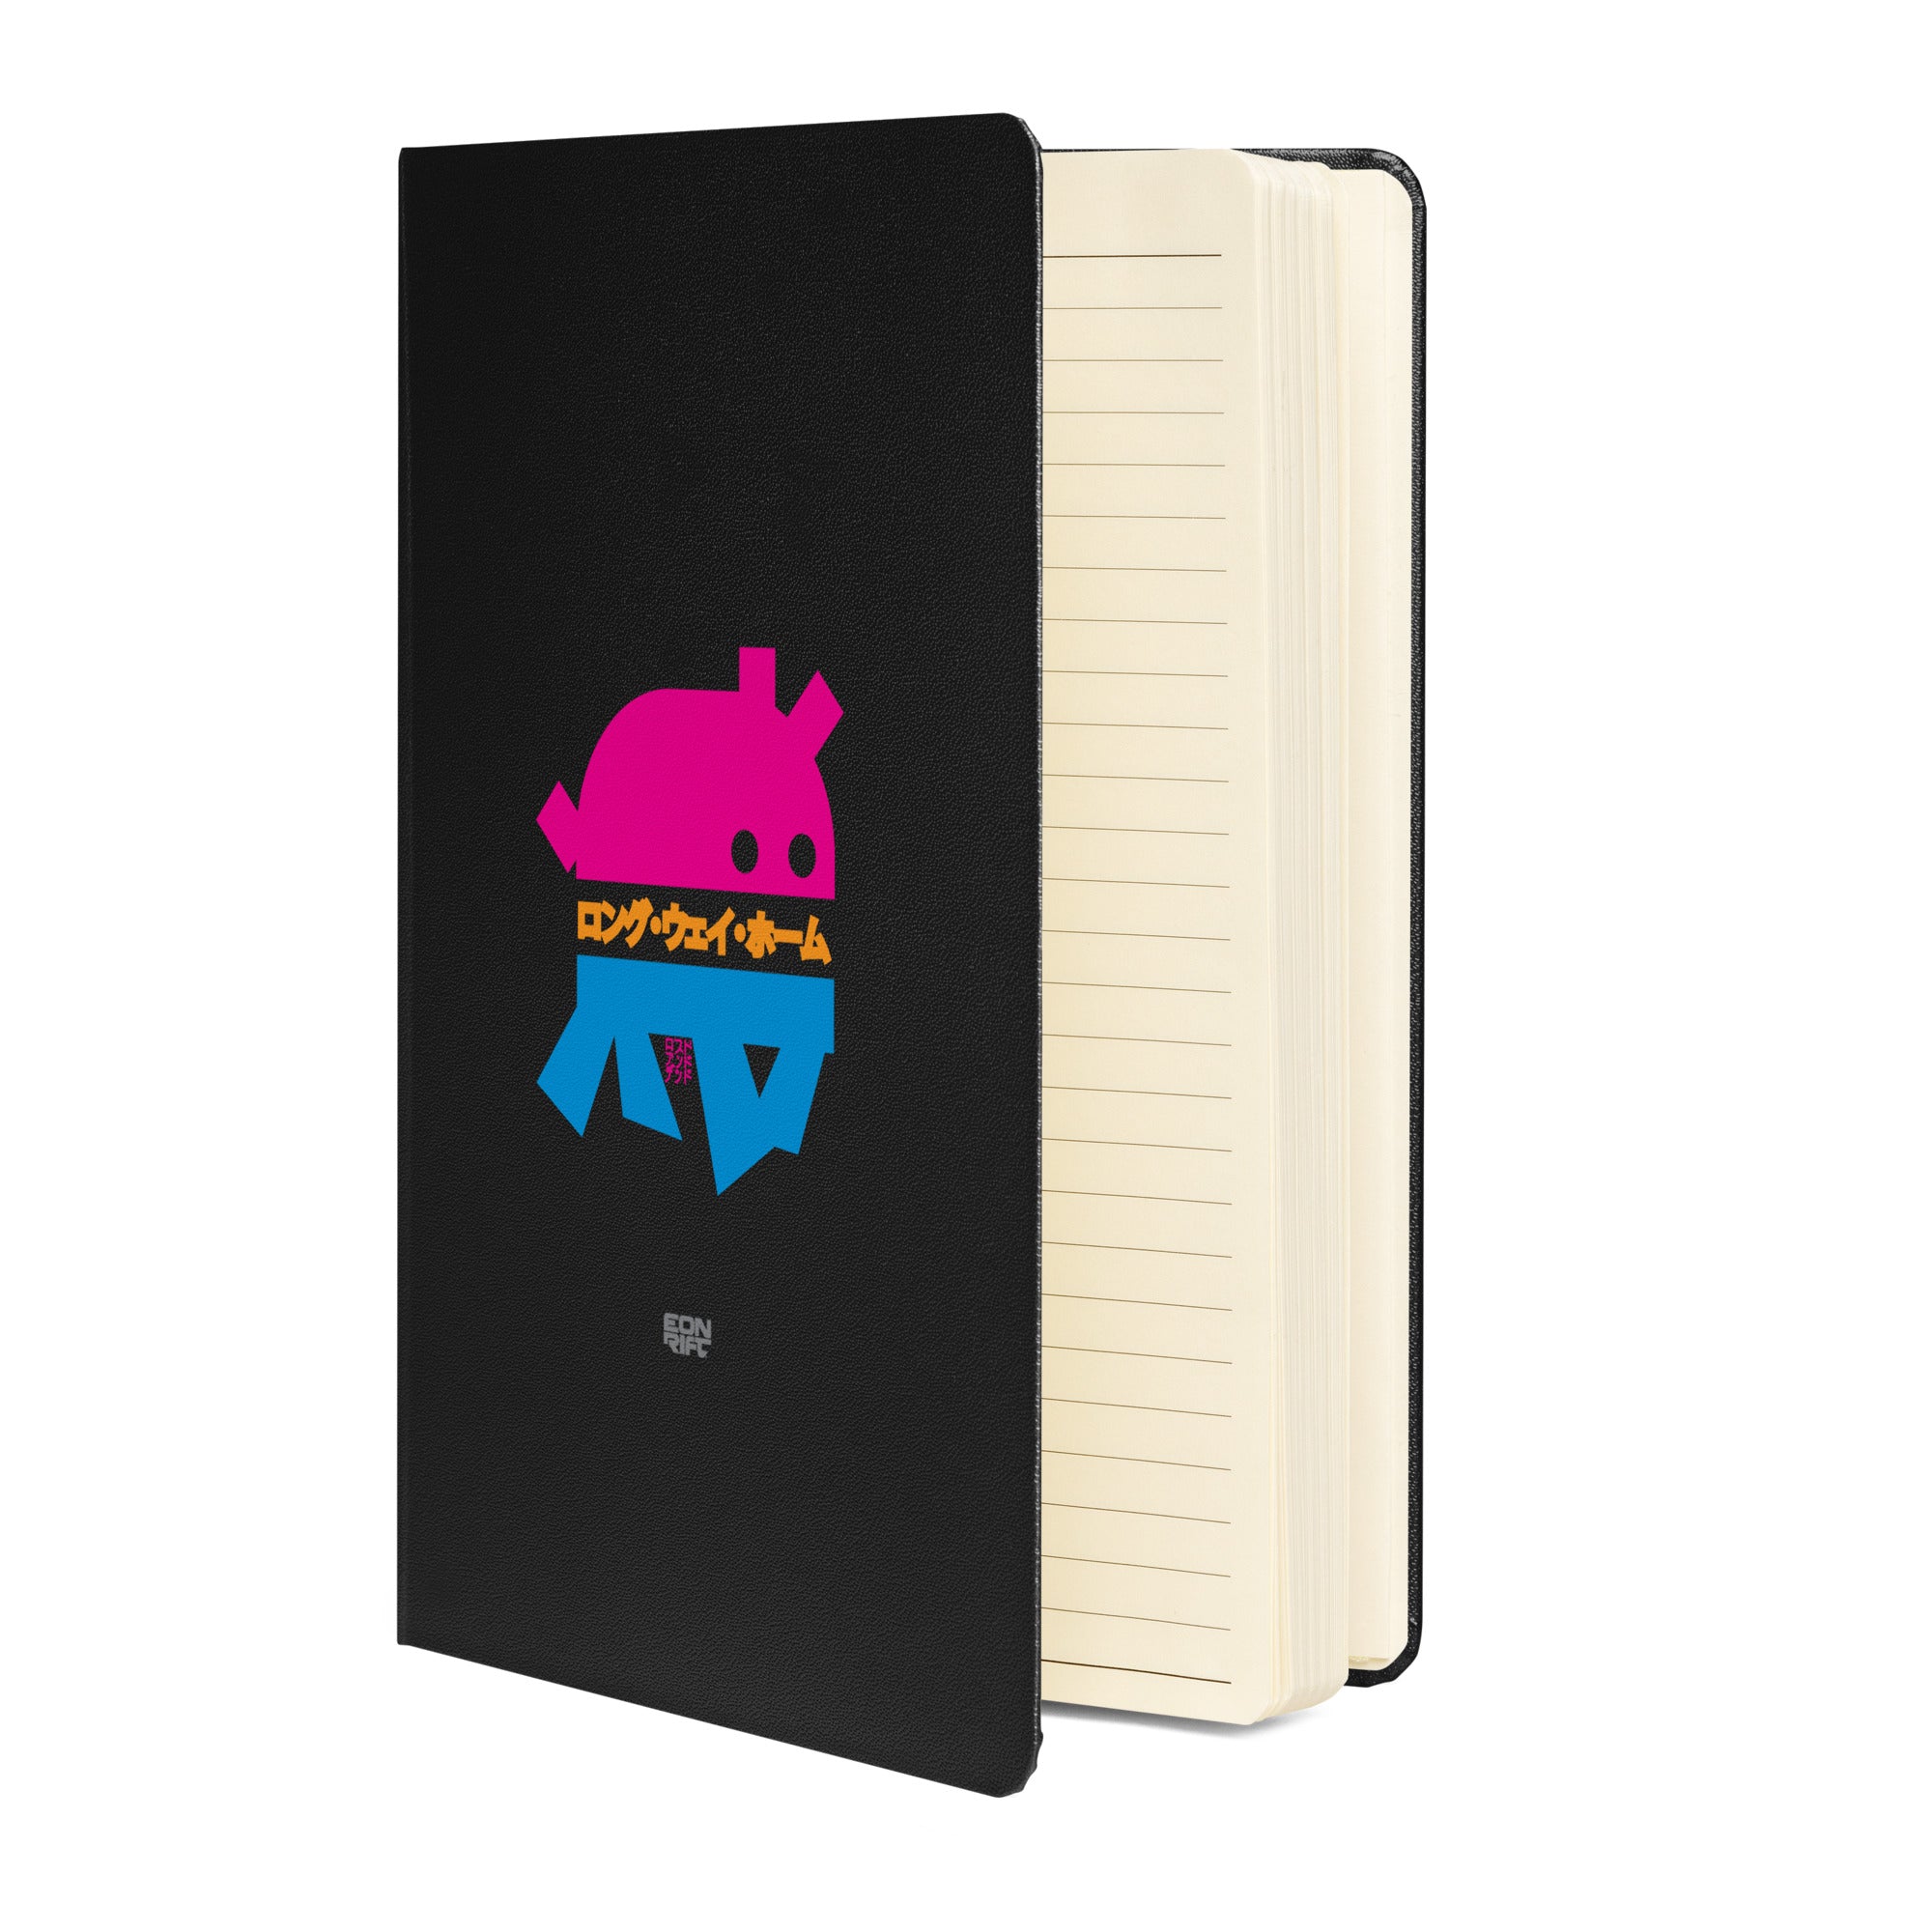 ELIFANT | Hardcover bound notebook